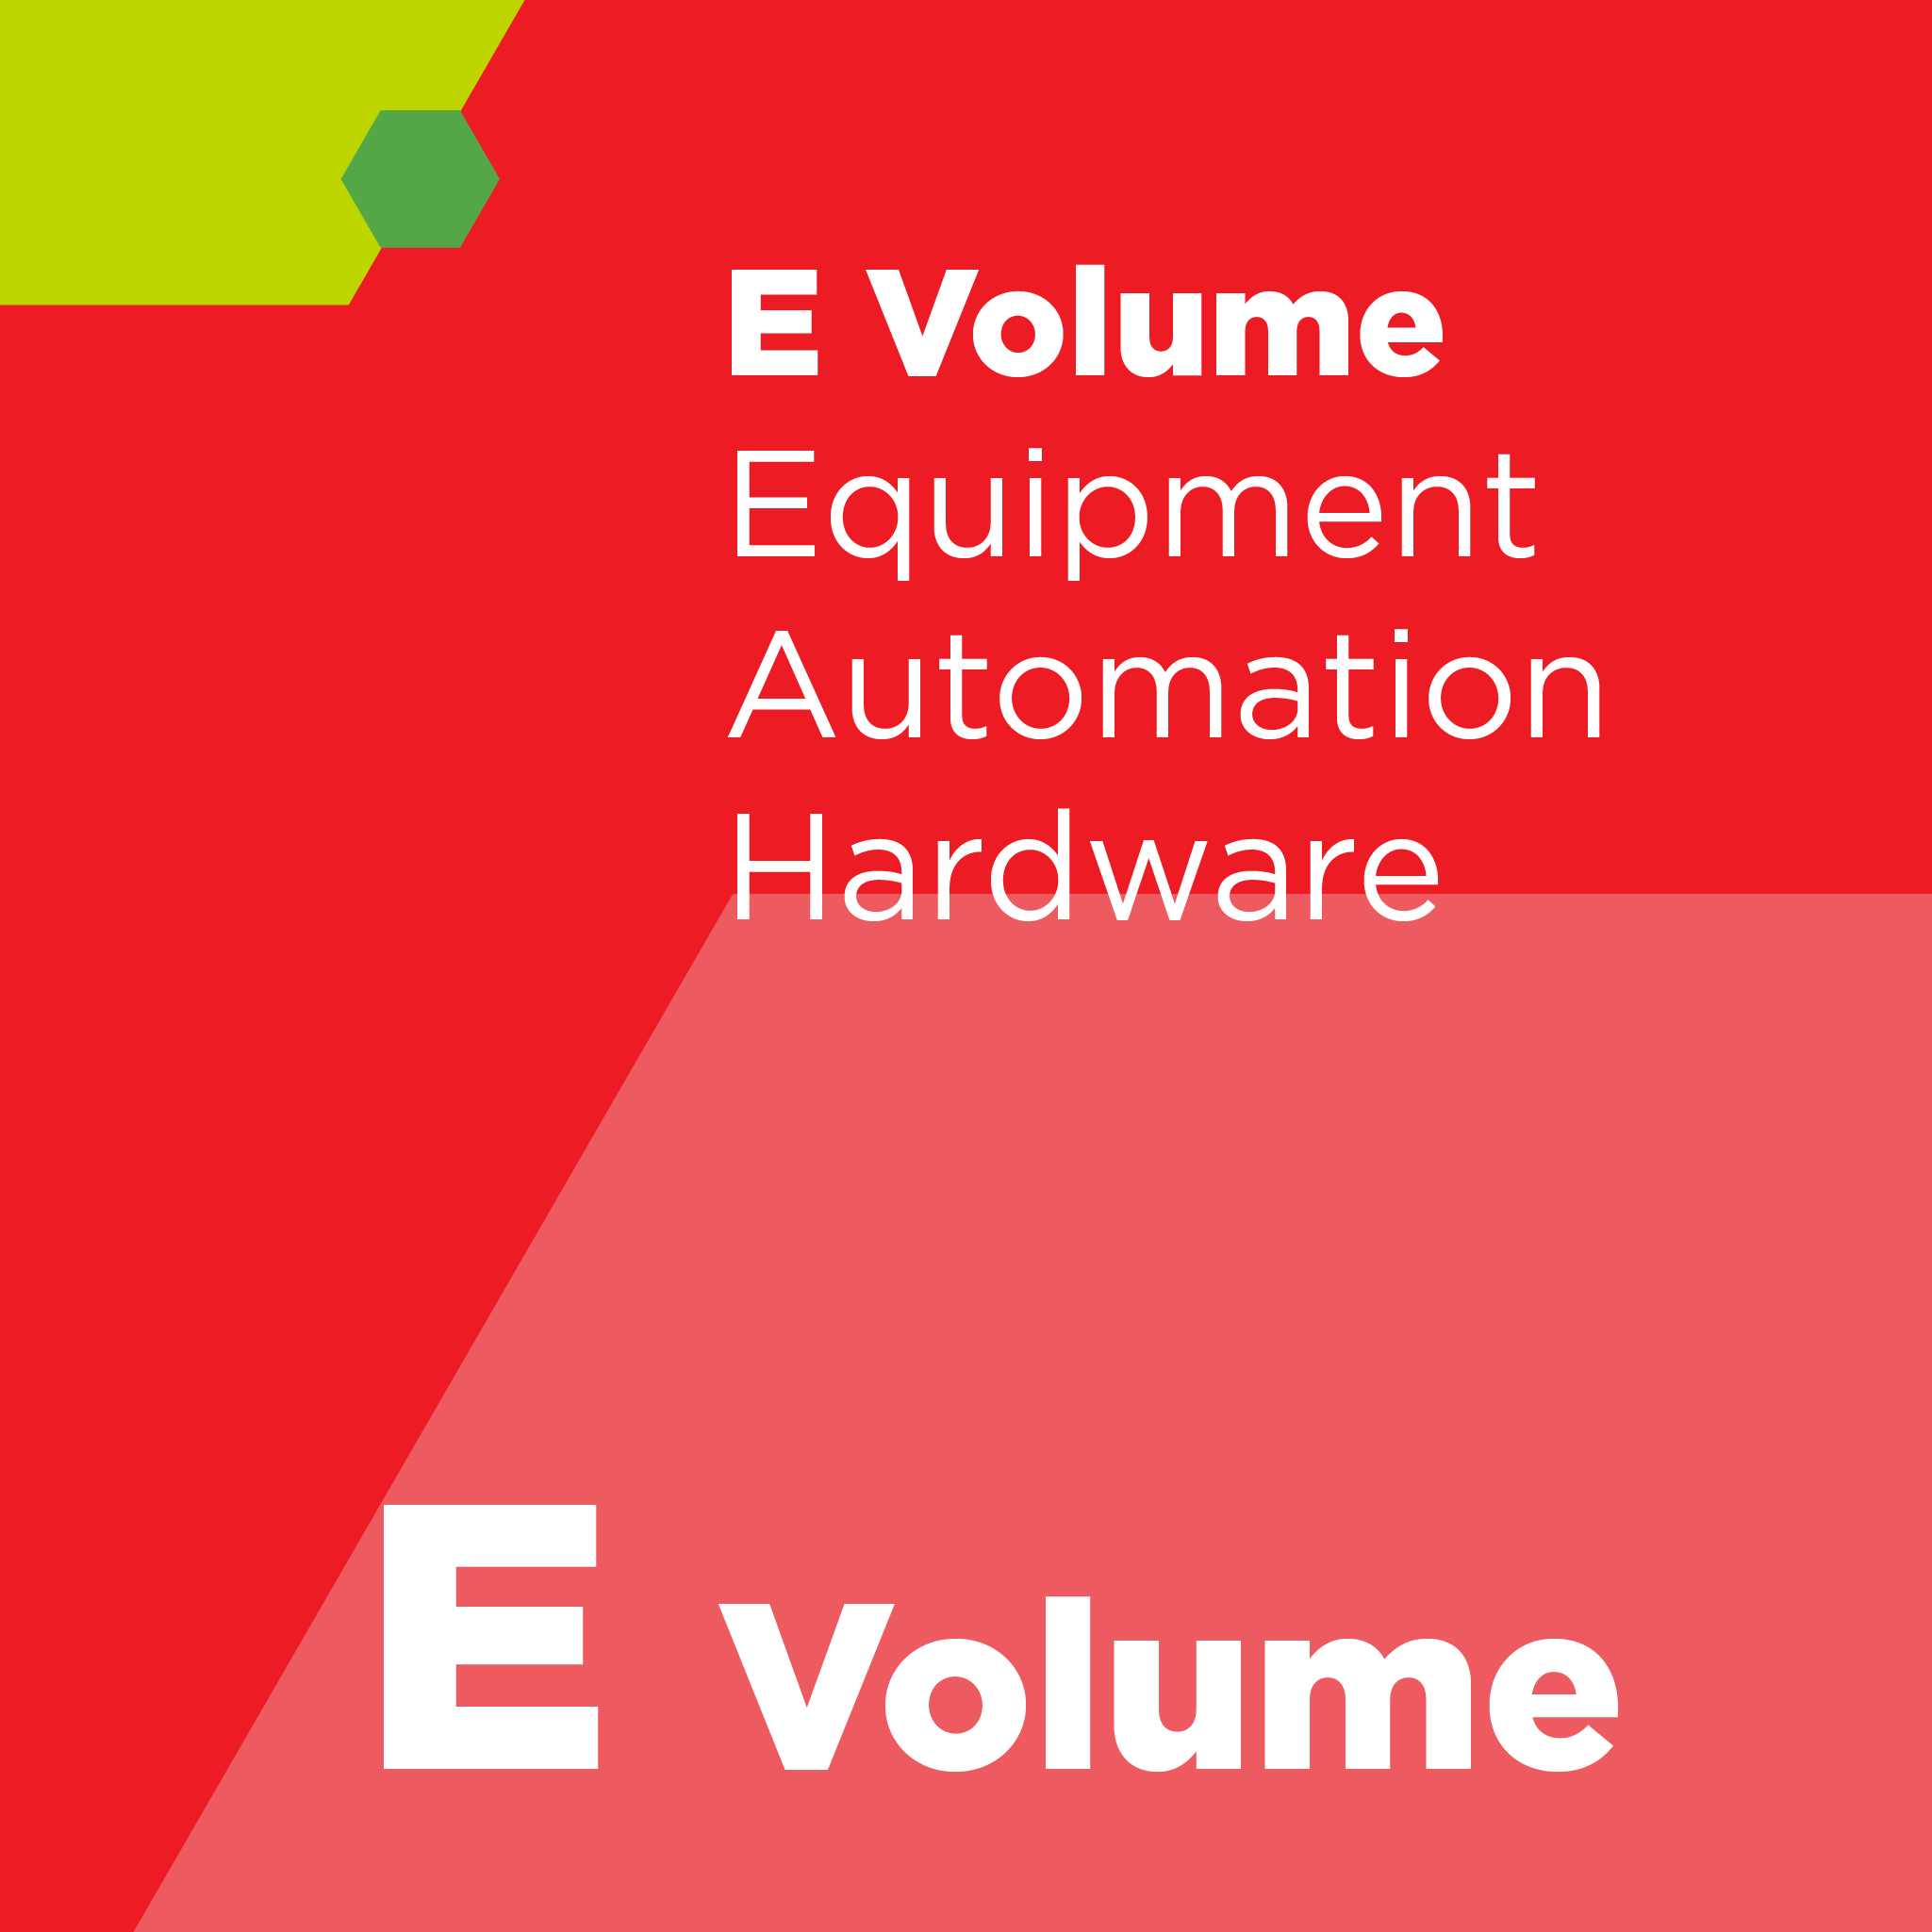 E07400 - SEMI E74 - Specification for Vacuum Pump Interfaces - Turbomolecular Pumps